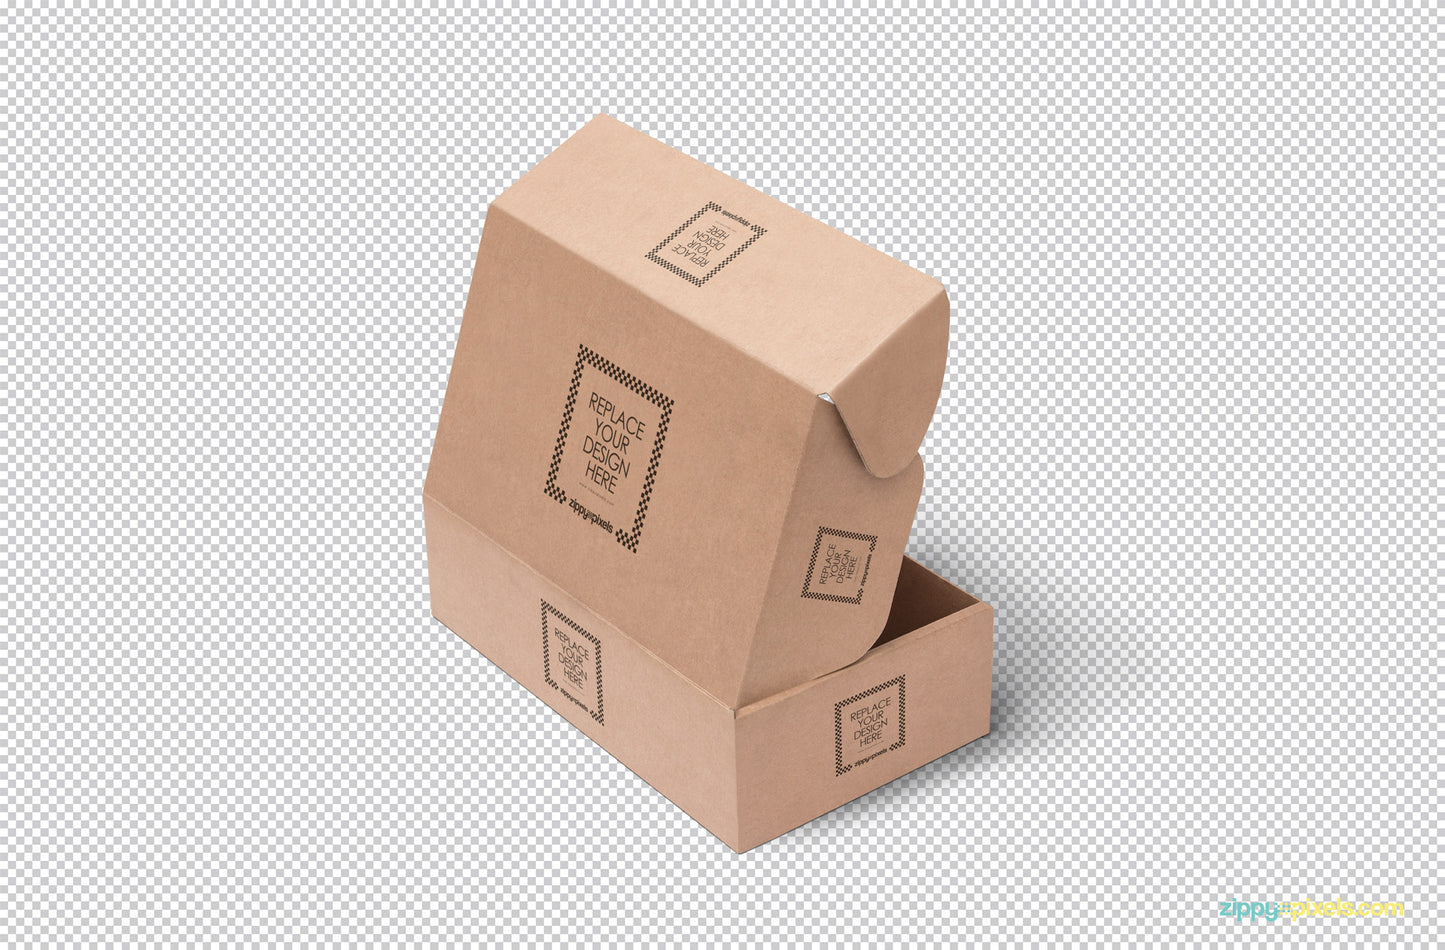 Free Product Box Mockup